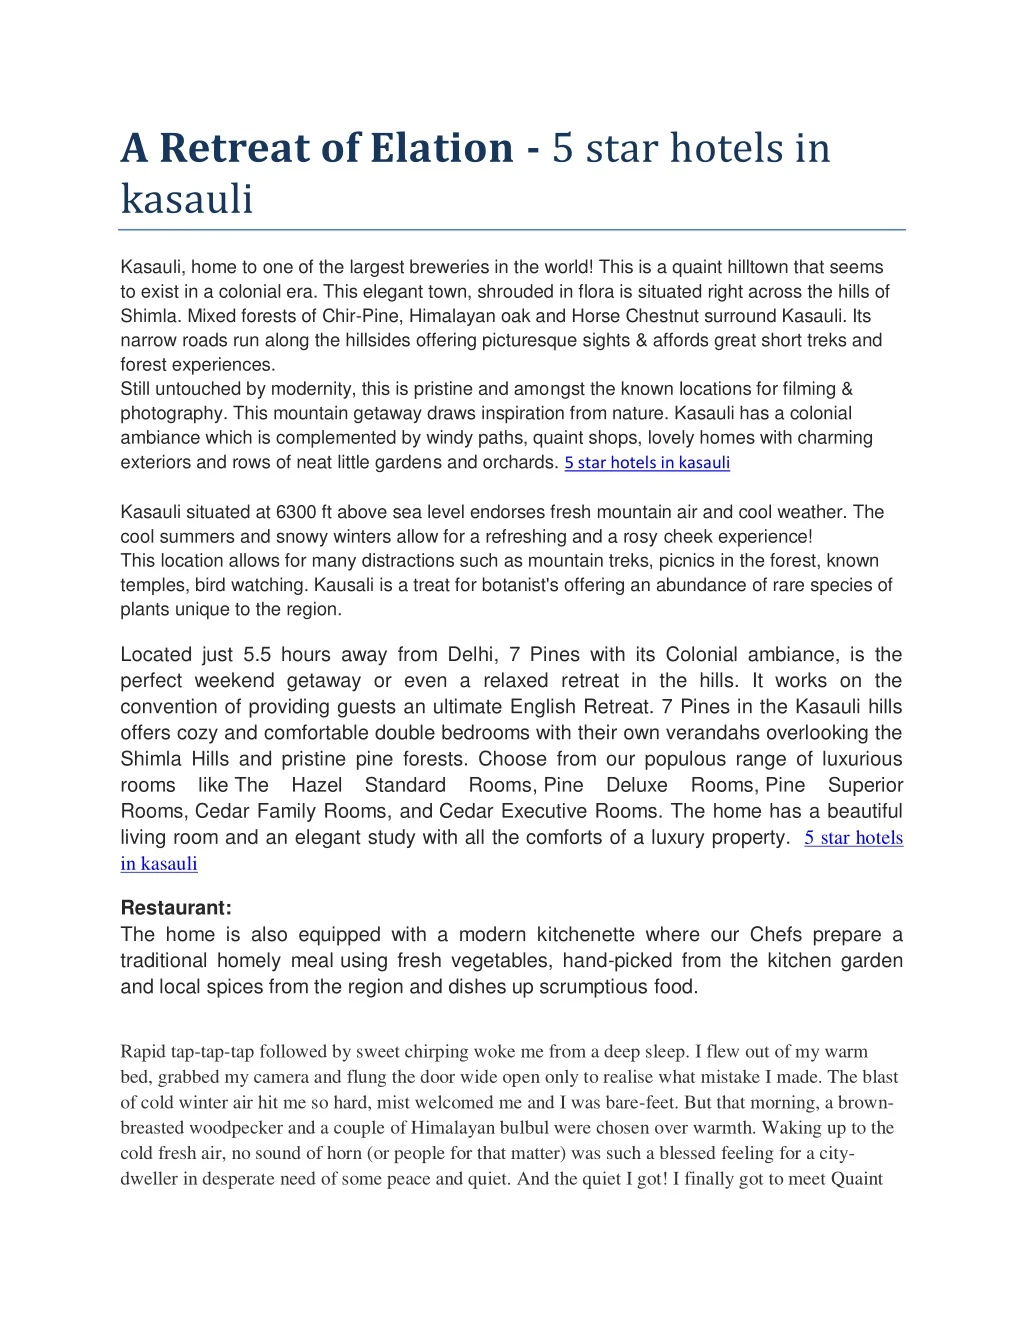 a retreat of elation 5 star hotels in kasauli